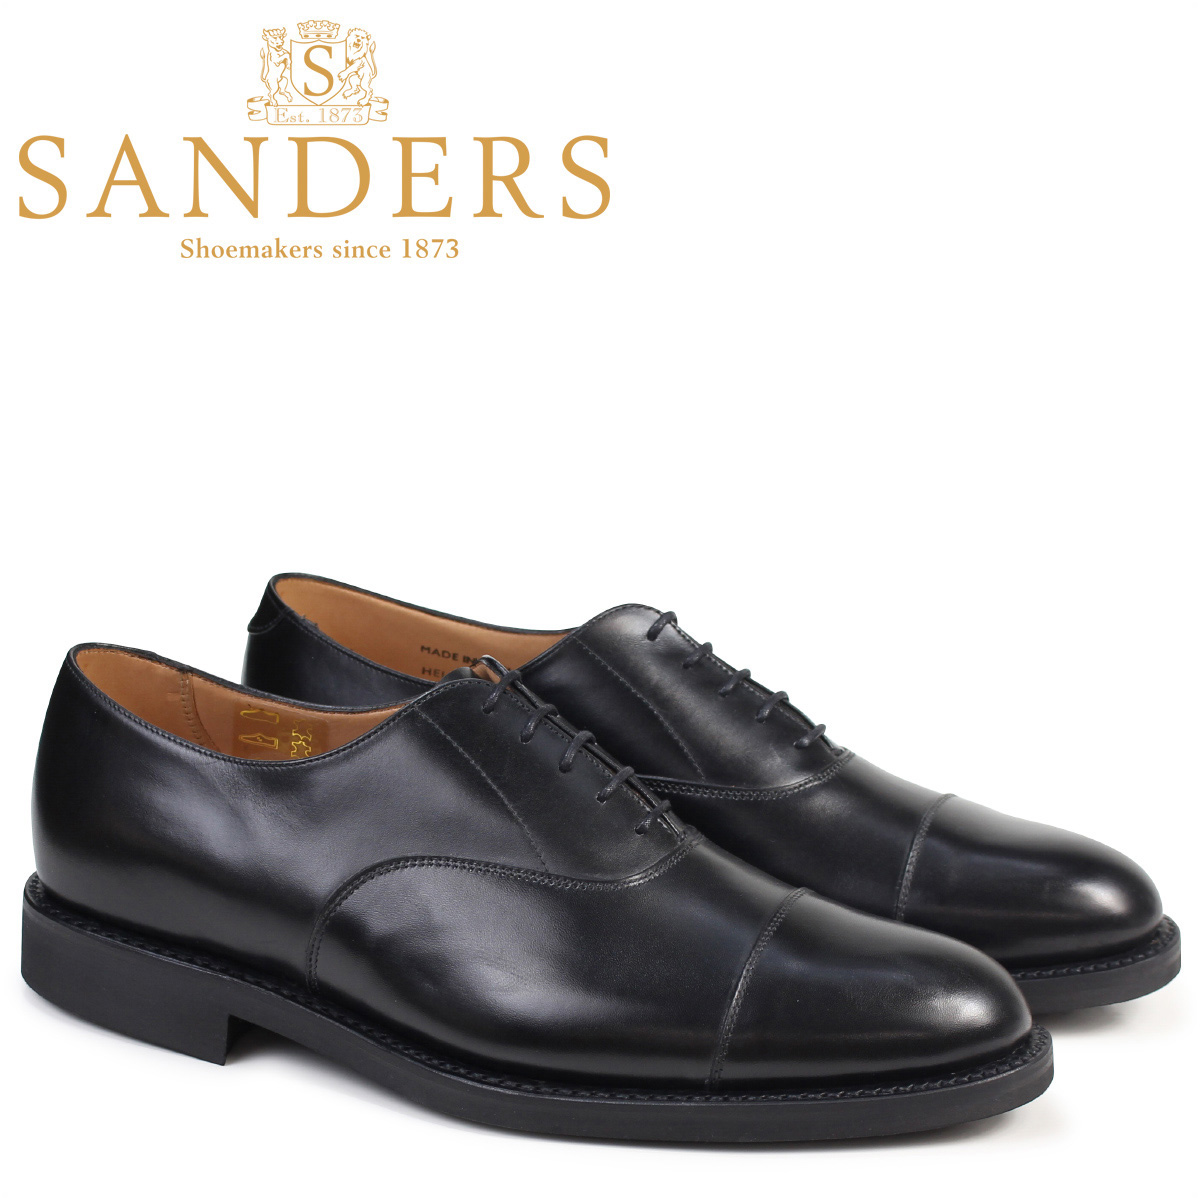 sanders oxford shoes